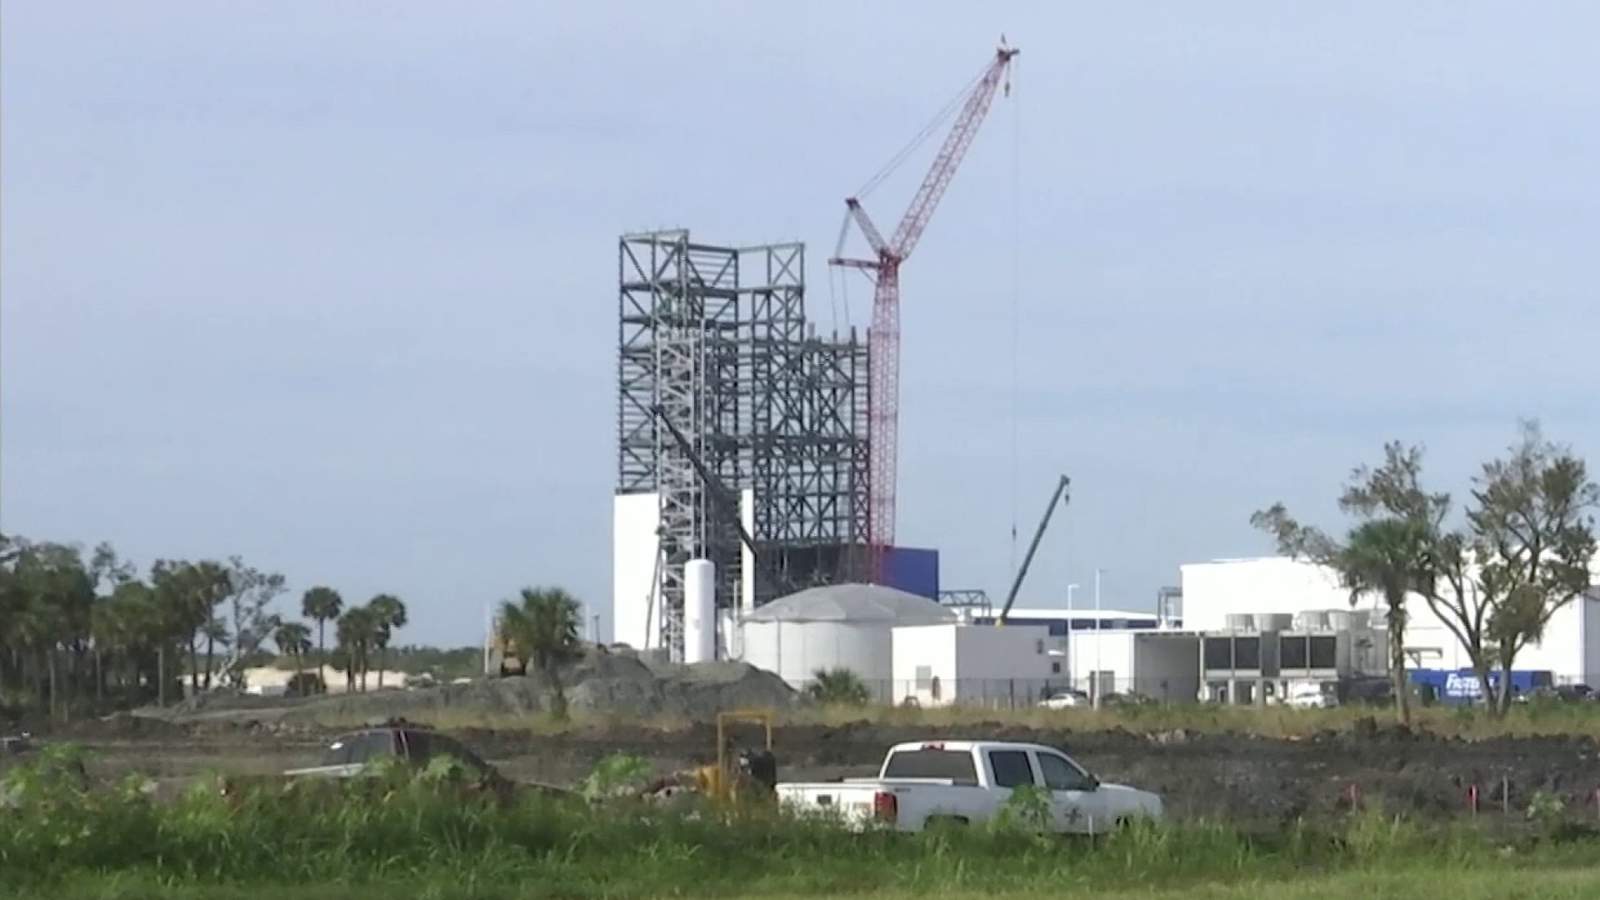 Blue Origin’s New Glenn launch pad taking shape at Cape Canaveral